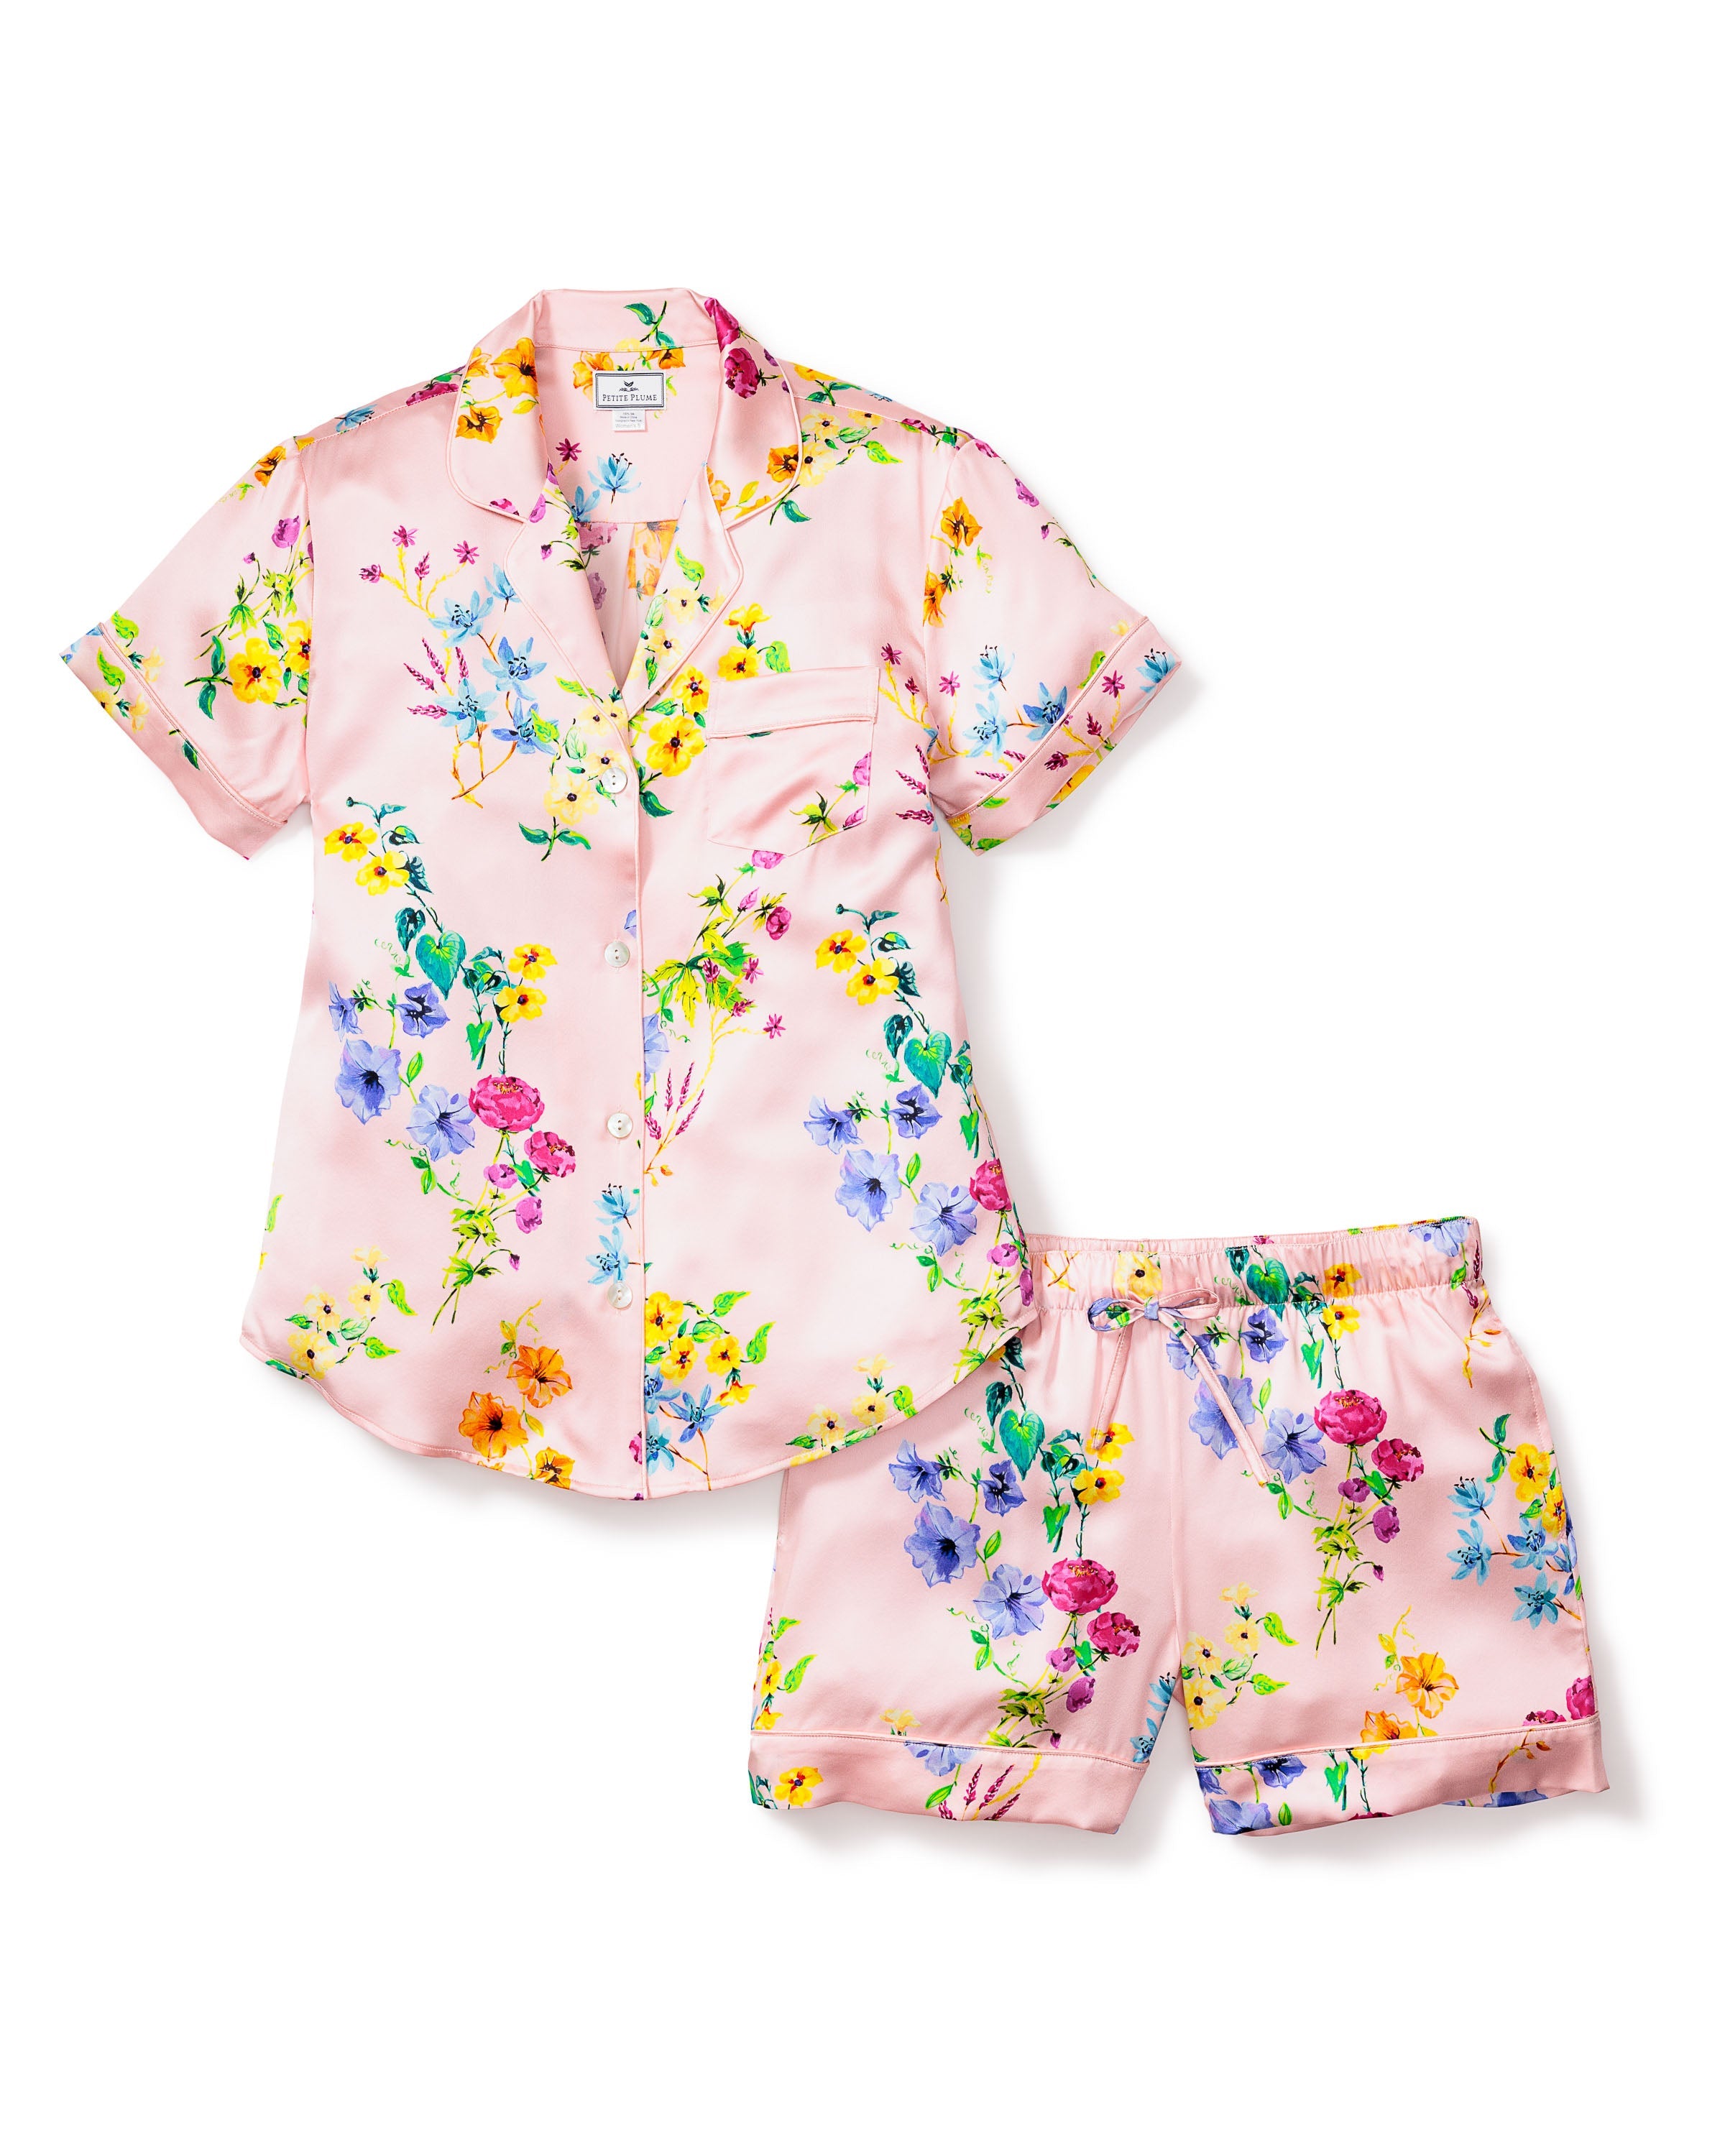 Women's Dorset Floral Luxe Pima Cotton Maternity Nightgown